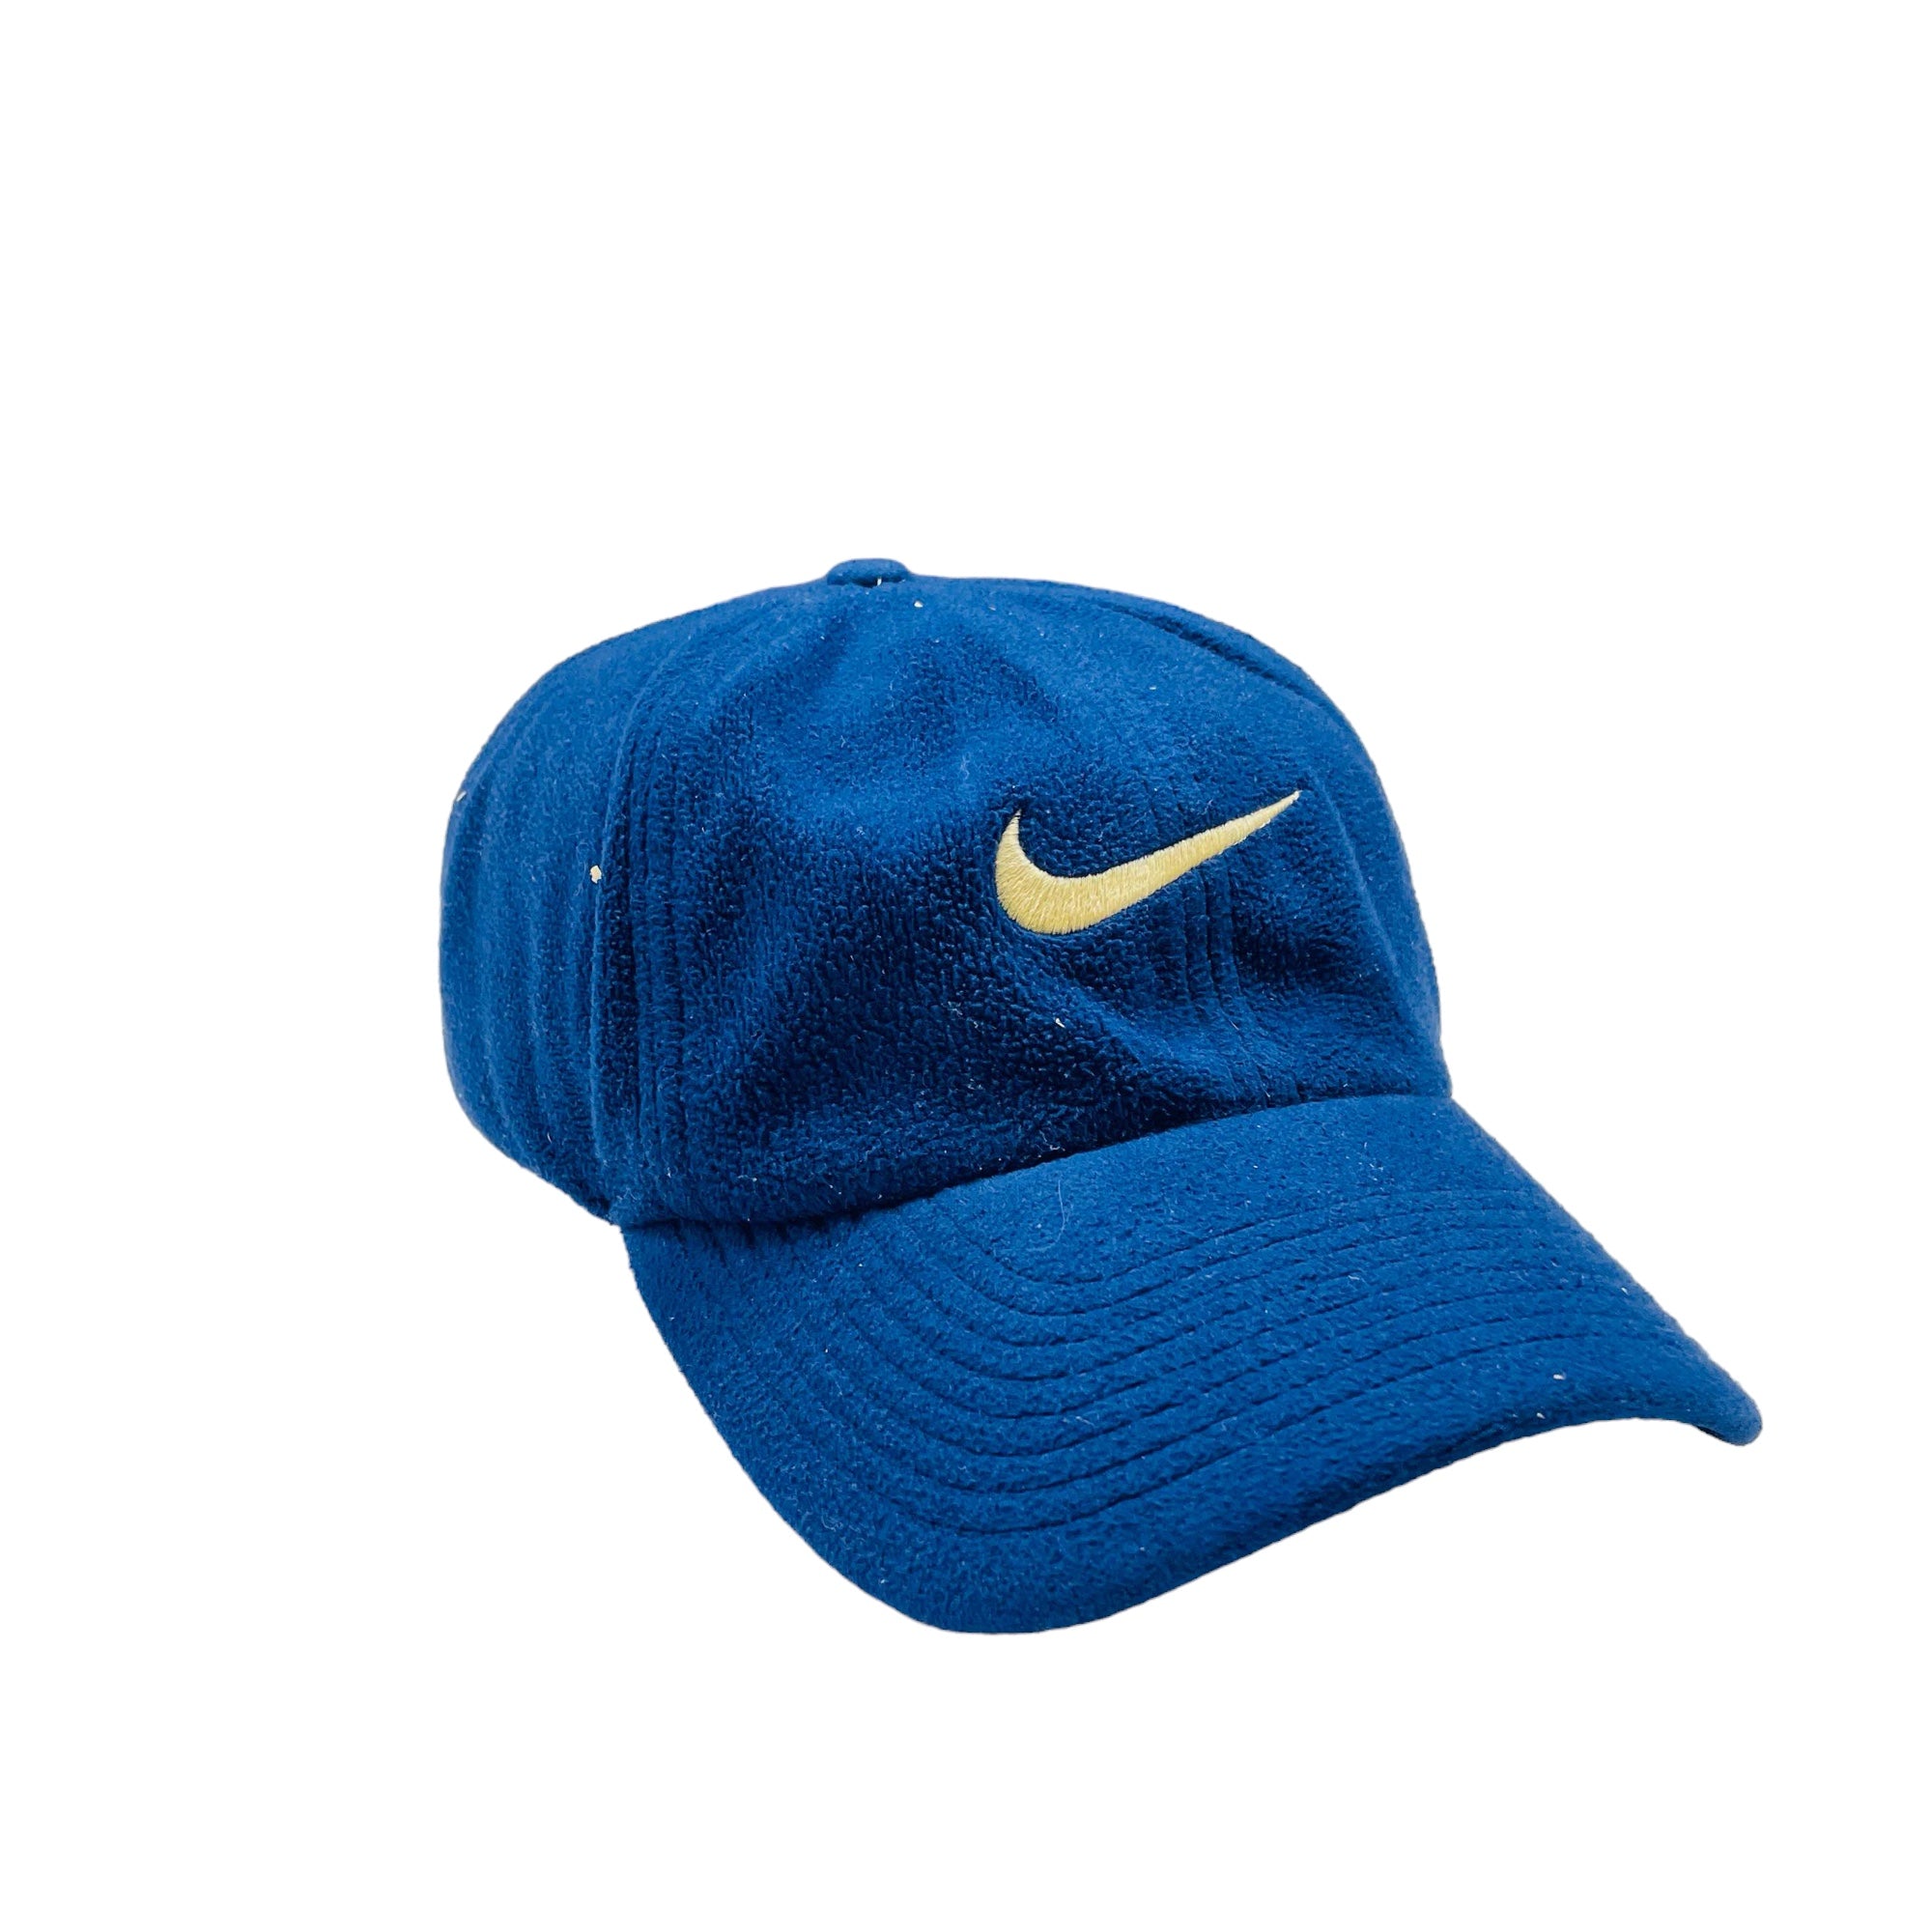 Nike Swoosh Fleeced Cap With Ear Covers - Adjustable